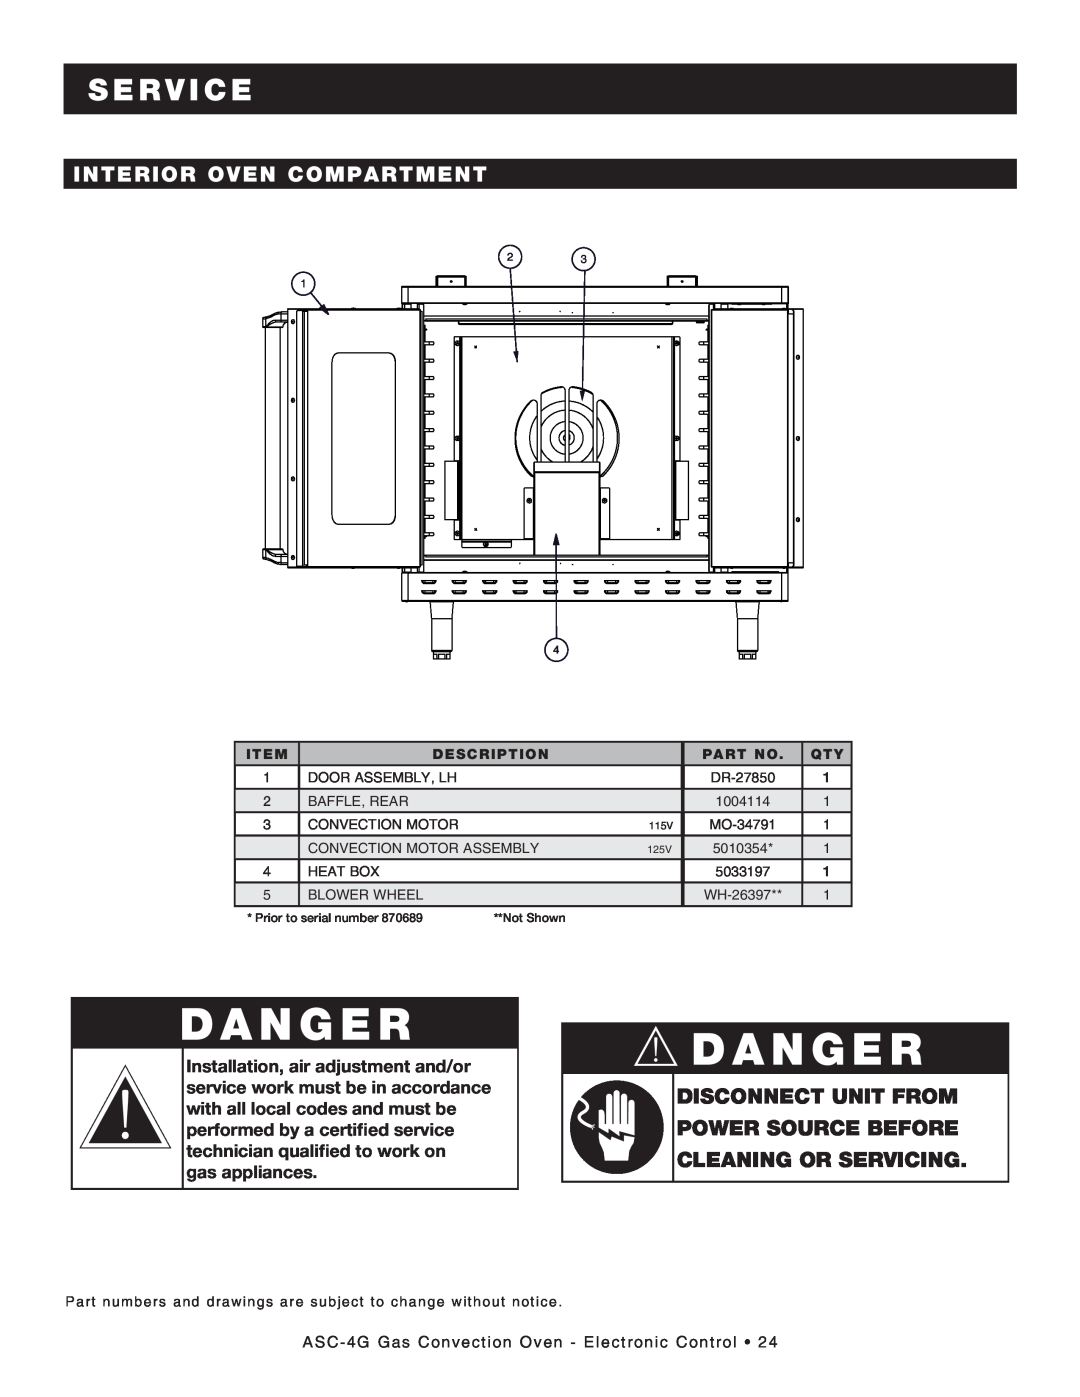 Alto-Shaam ASC-4G manual interior oven compartment, D A n G E R, DAnGER, s e rvi c e, Description 